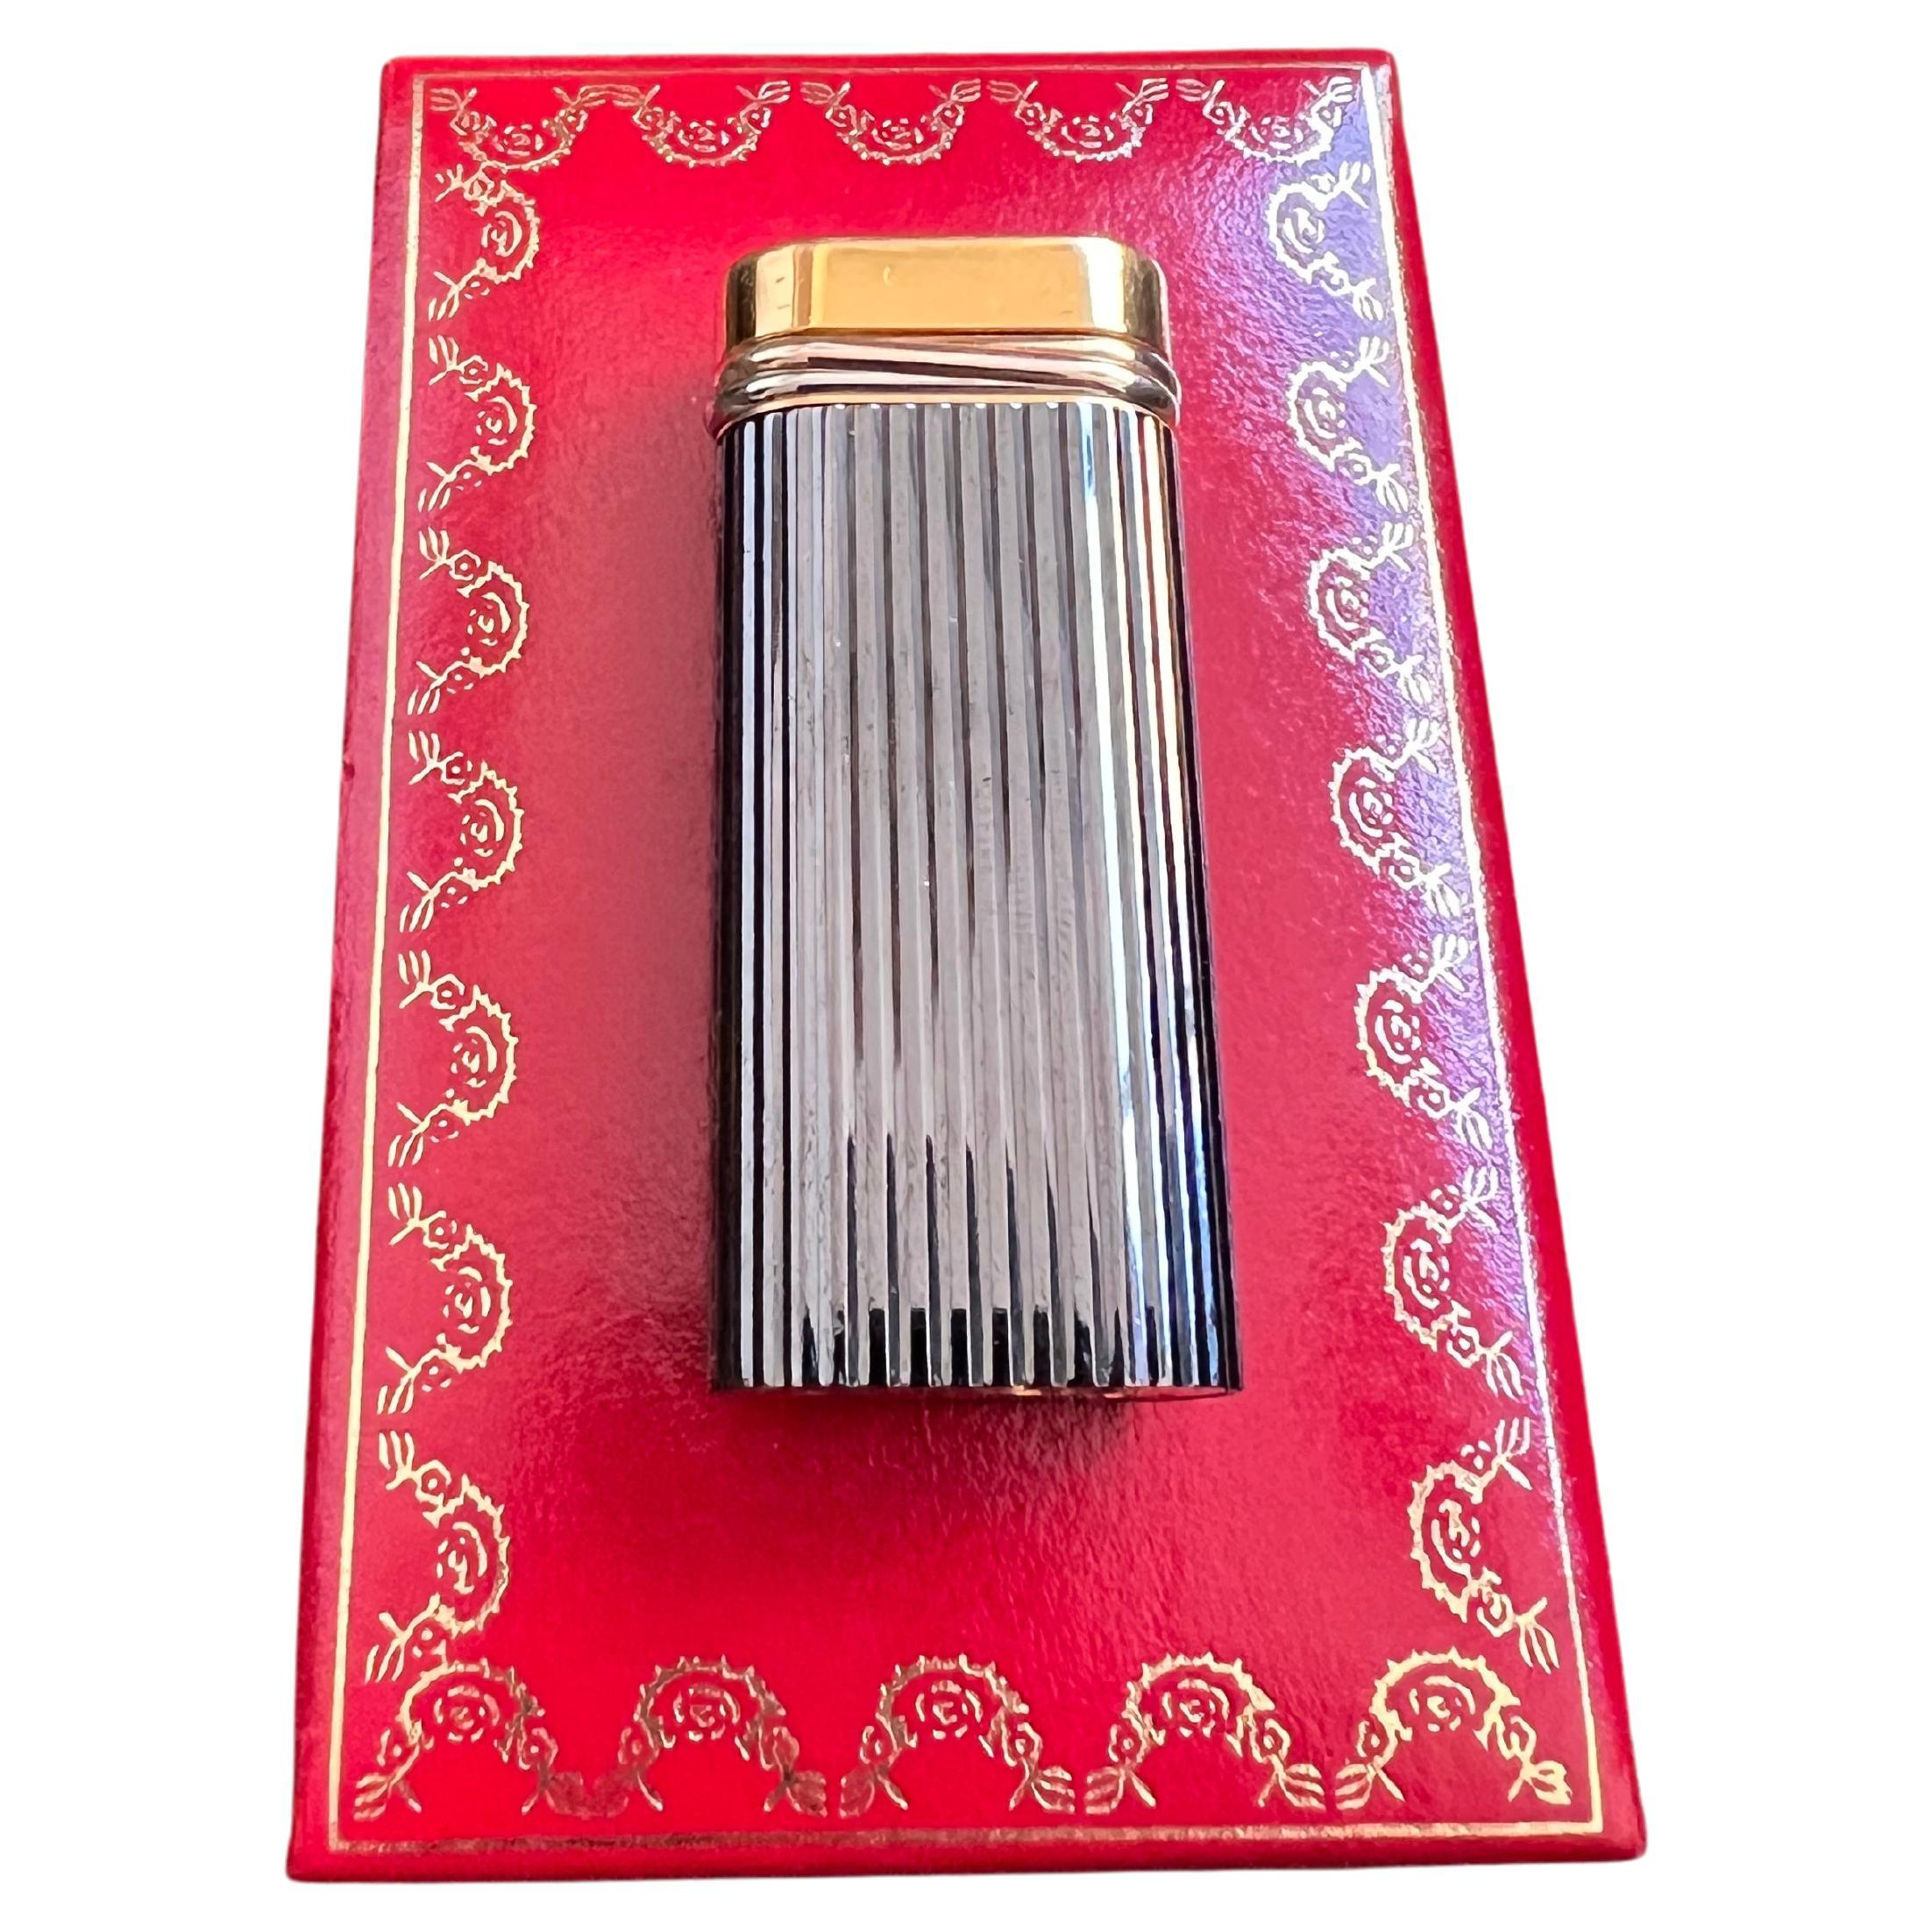 Vintage Cartier Lighter Short “Trinity” Rare Gold and Gunmetal “Godron” Model For Sale